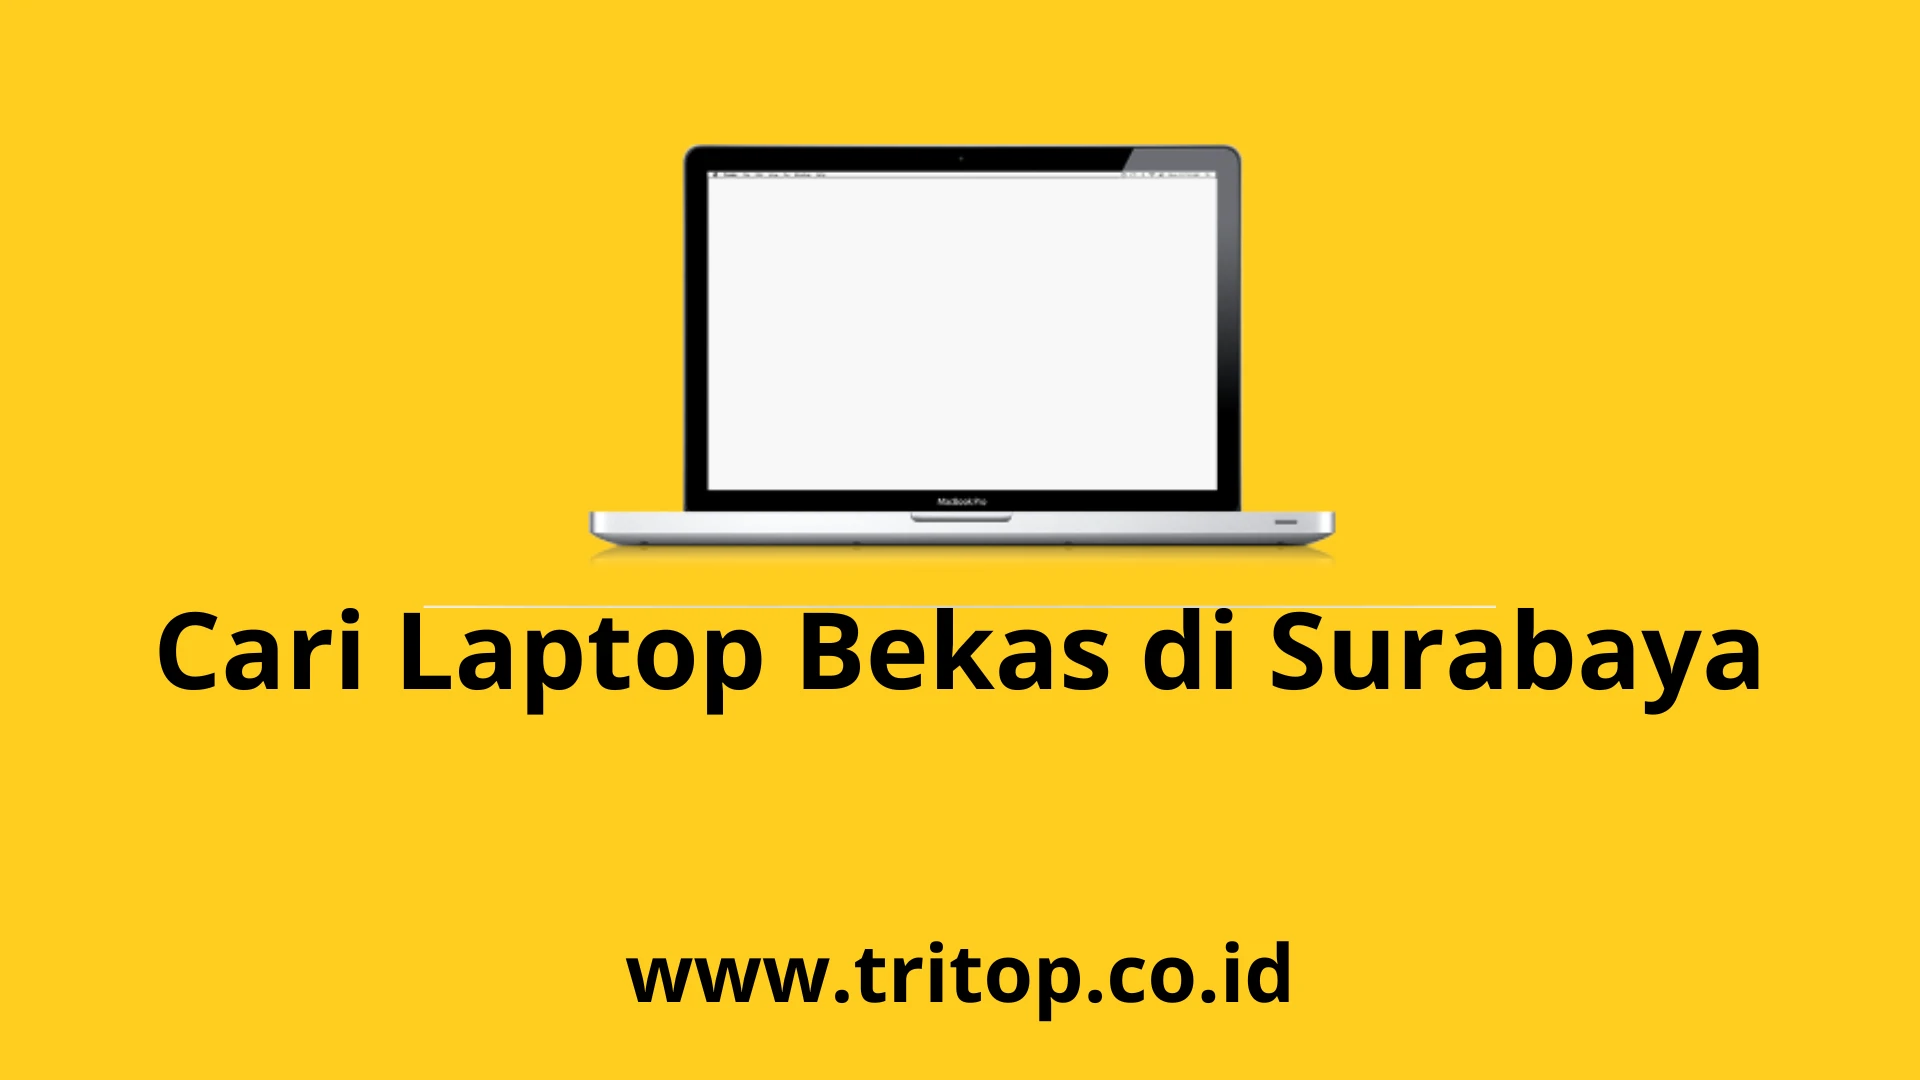 Cari Laptop Bekas di Surabaya www.tritop.co.id